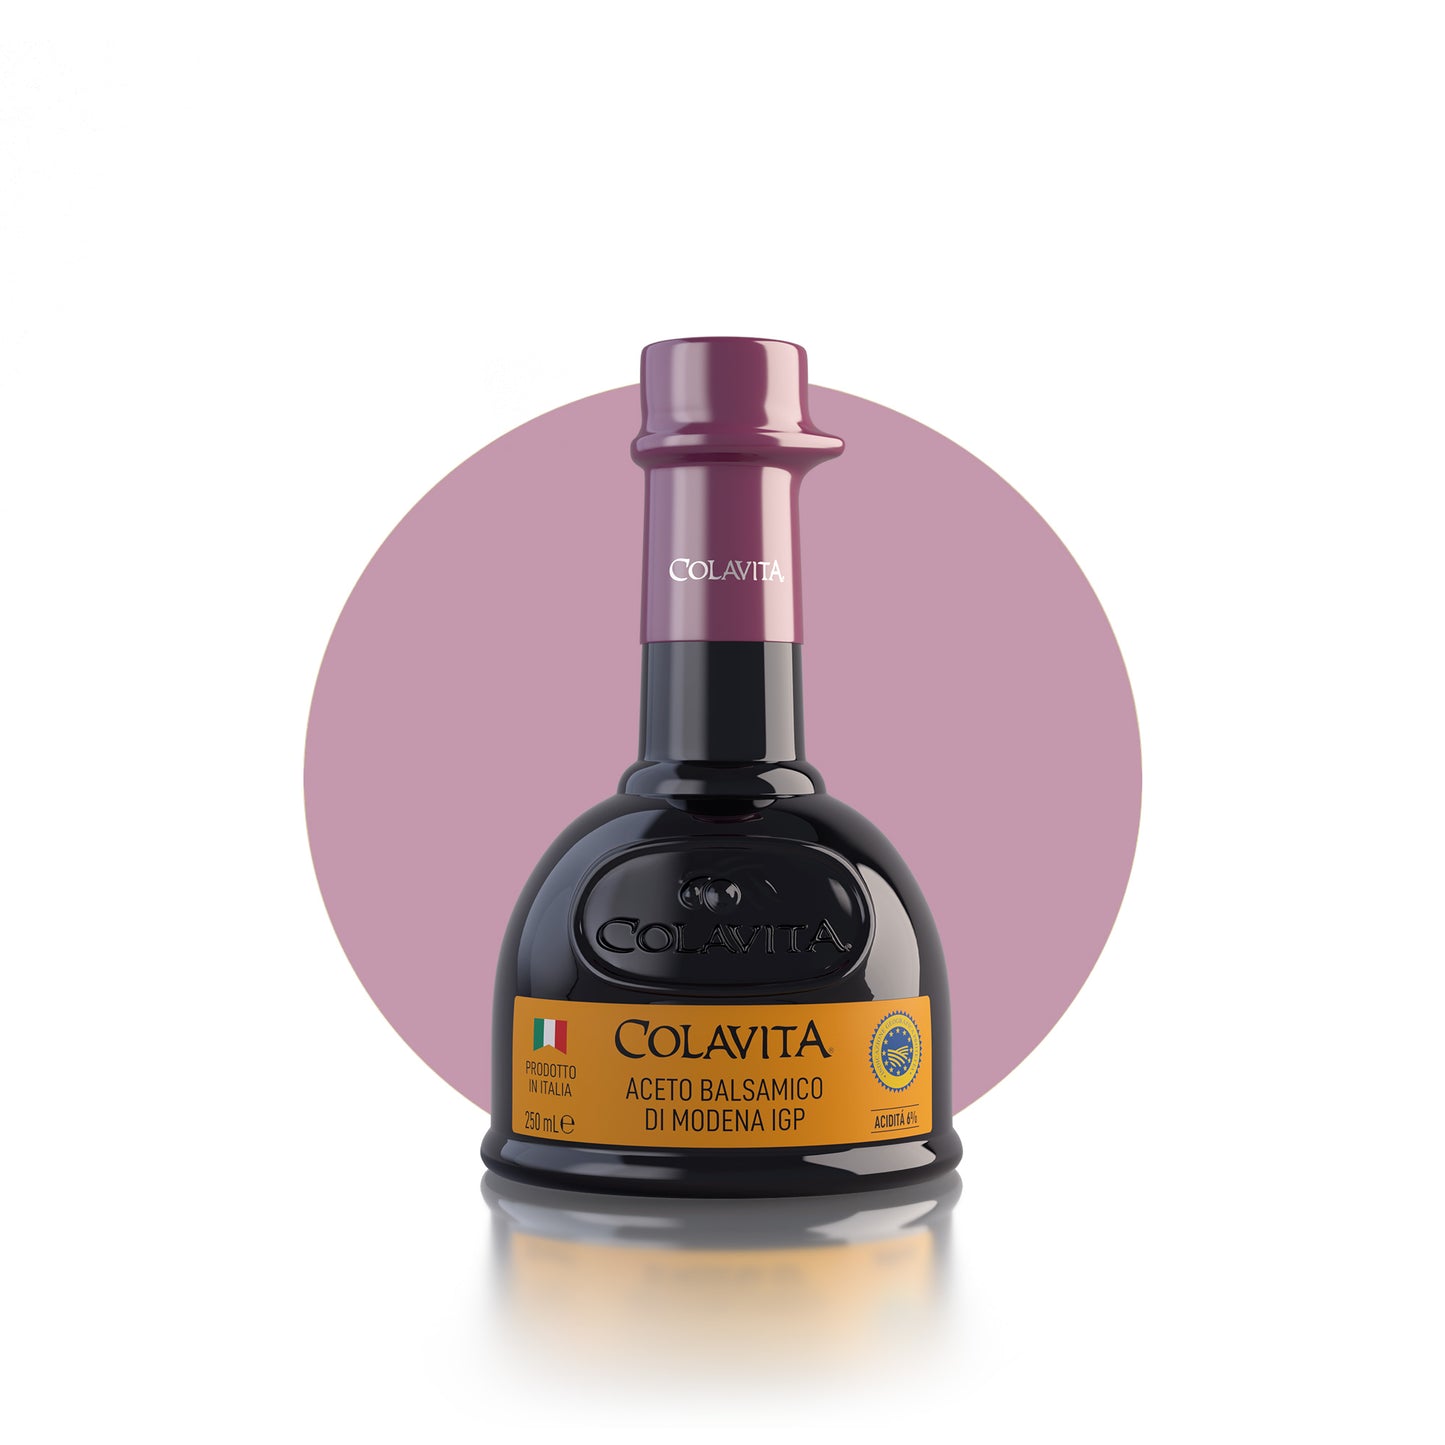 
                  
                    Balsamic Vinegar of Modena
                  
                